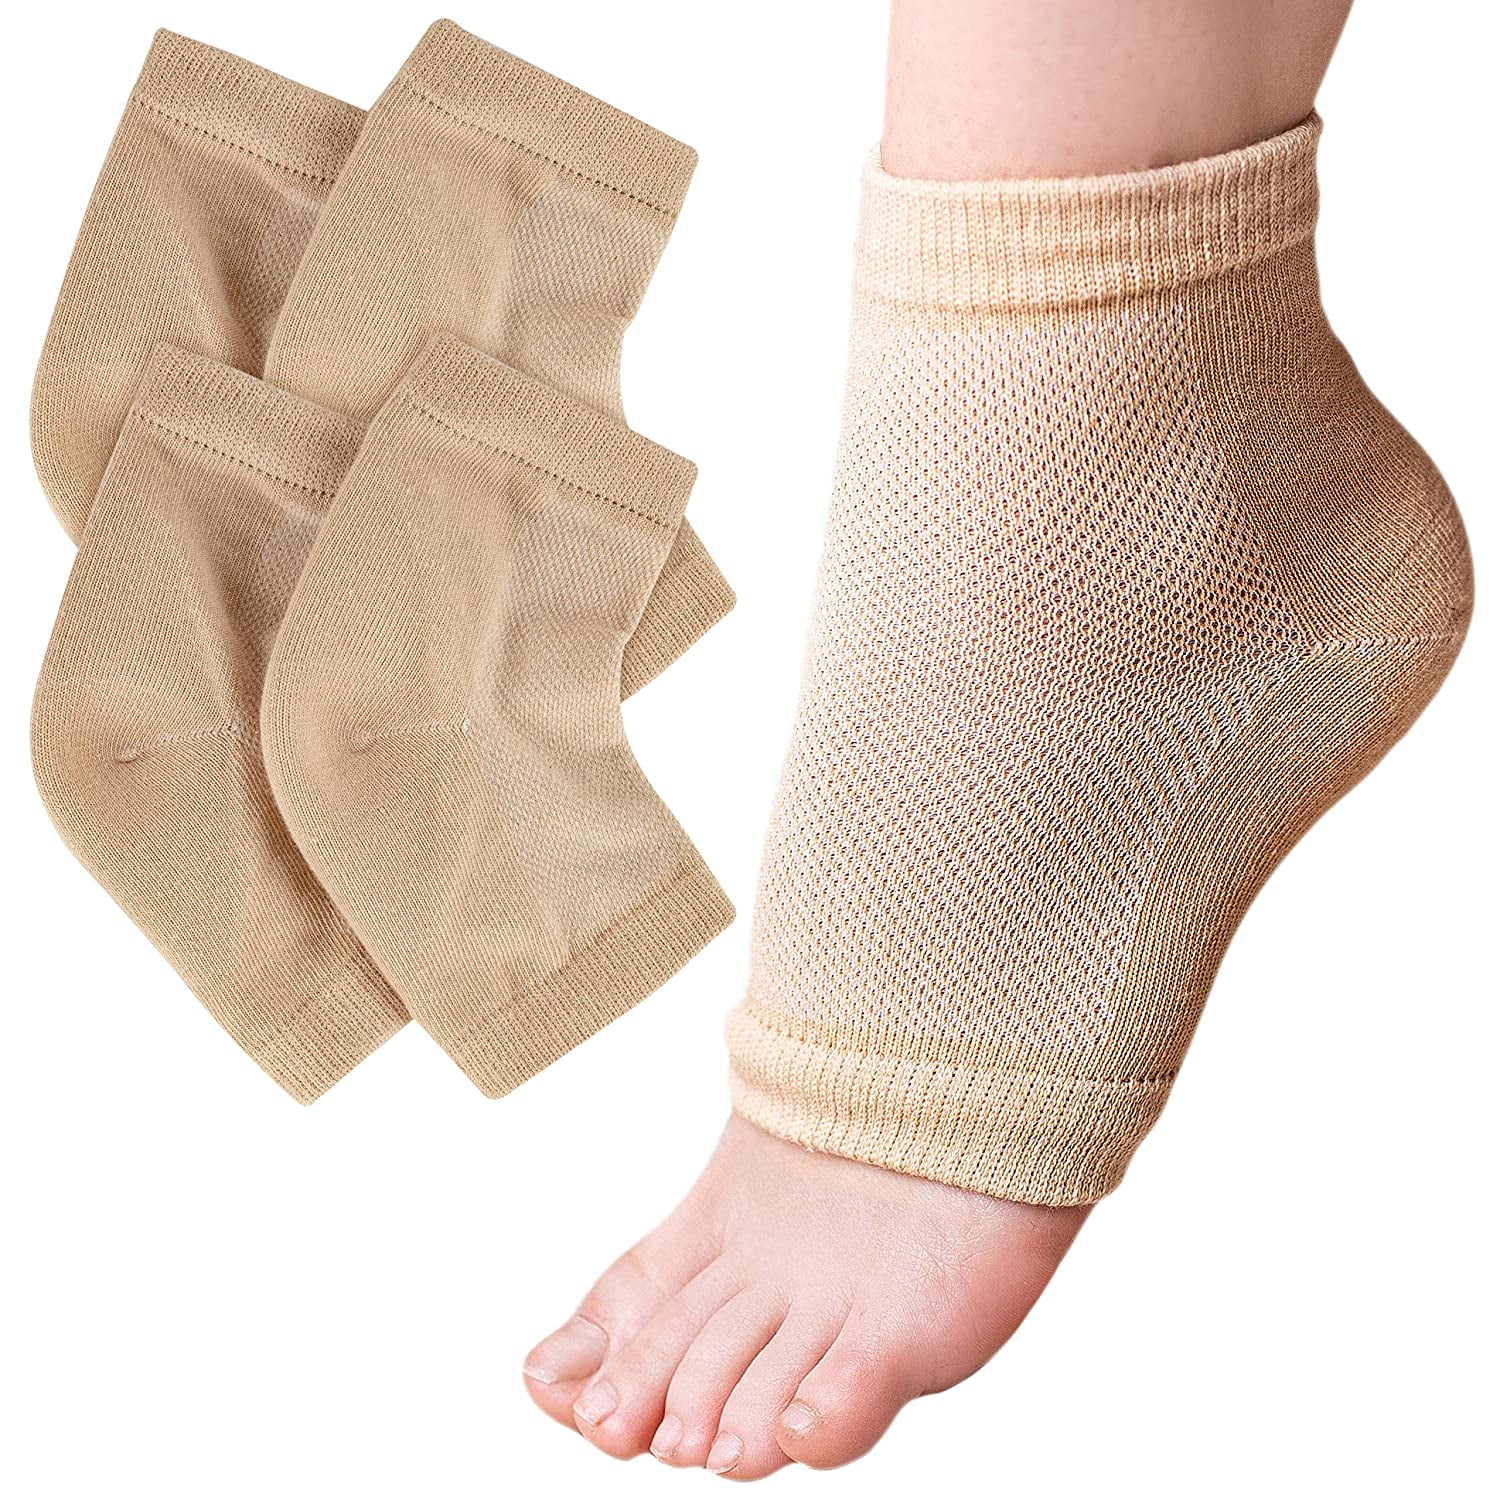 ERIN Moisturizing Heel Socks 2 Pairs Gel Heels Open Toe to Heal and Treat  Dry Feet & Heels Fast, Treatment, Pain Relief from Cracking Foot Skin  Socks